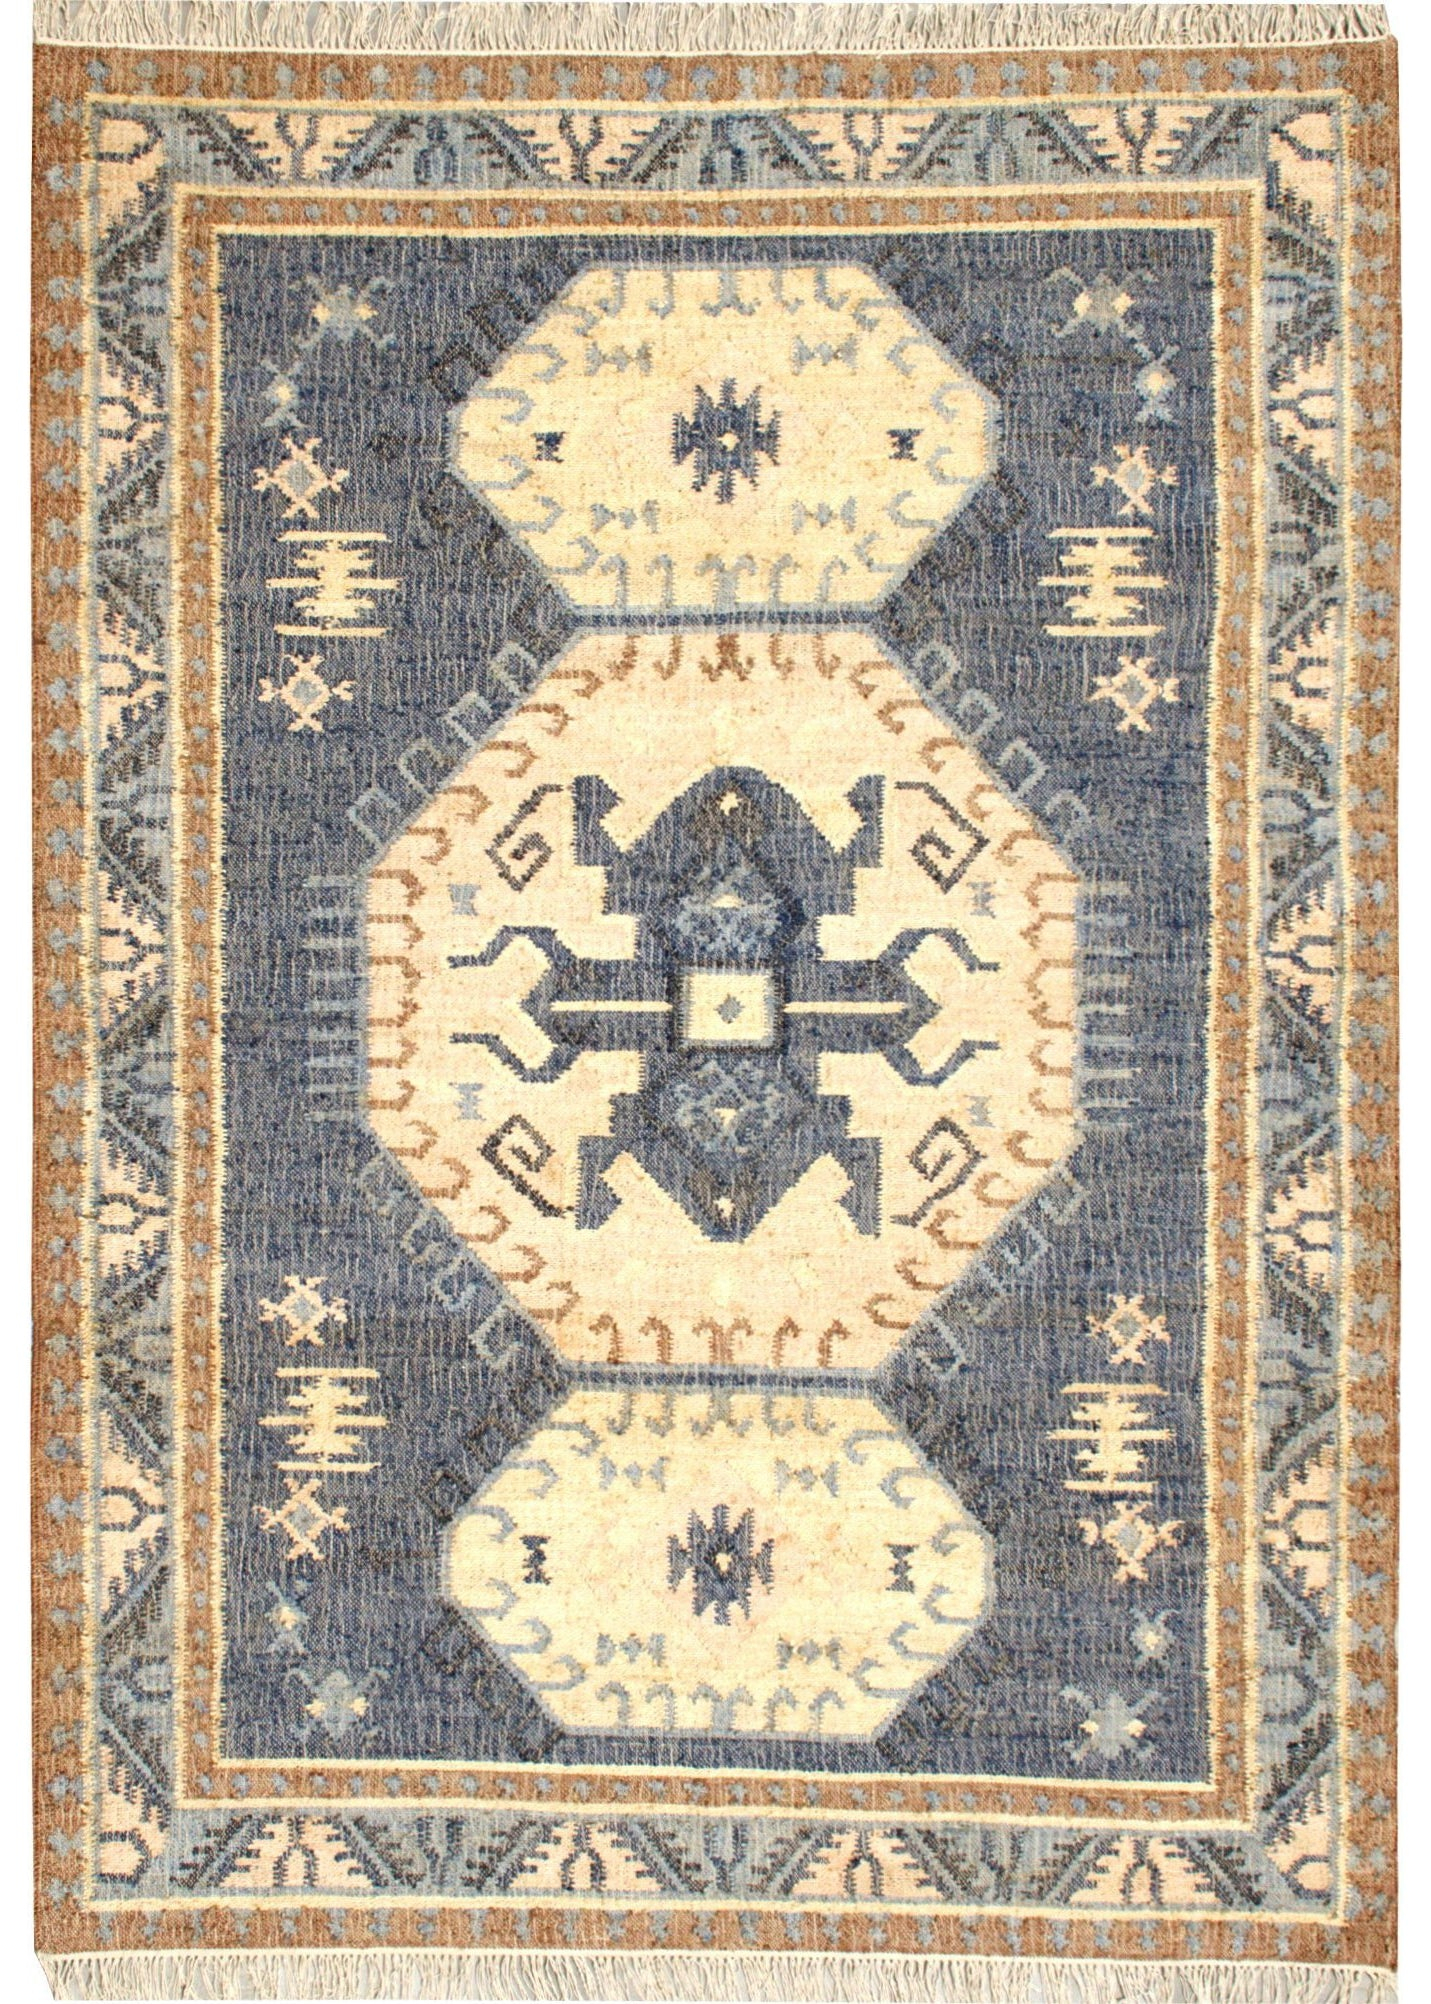 Kilim Jute Handmade Rug-Area rug for living room, dining area, and bedroom